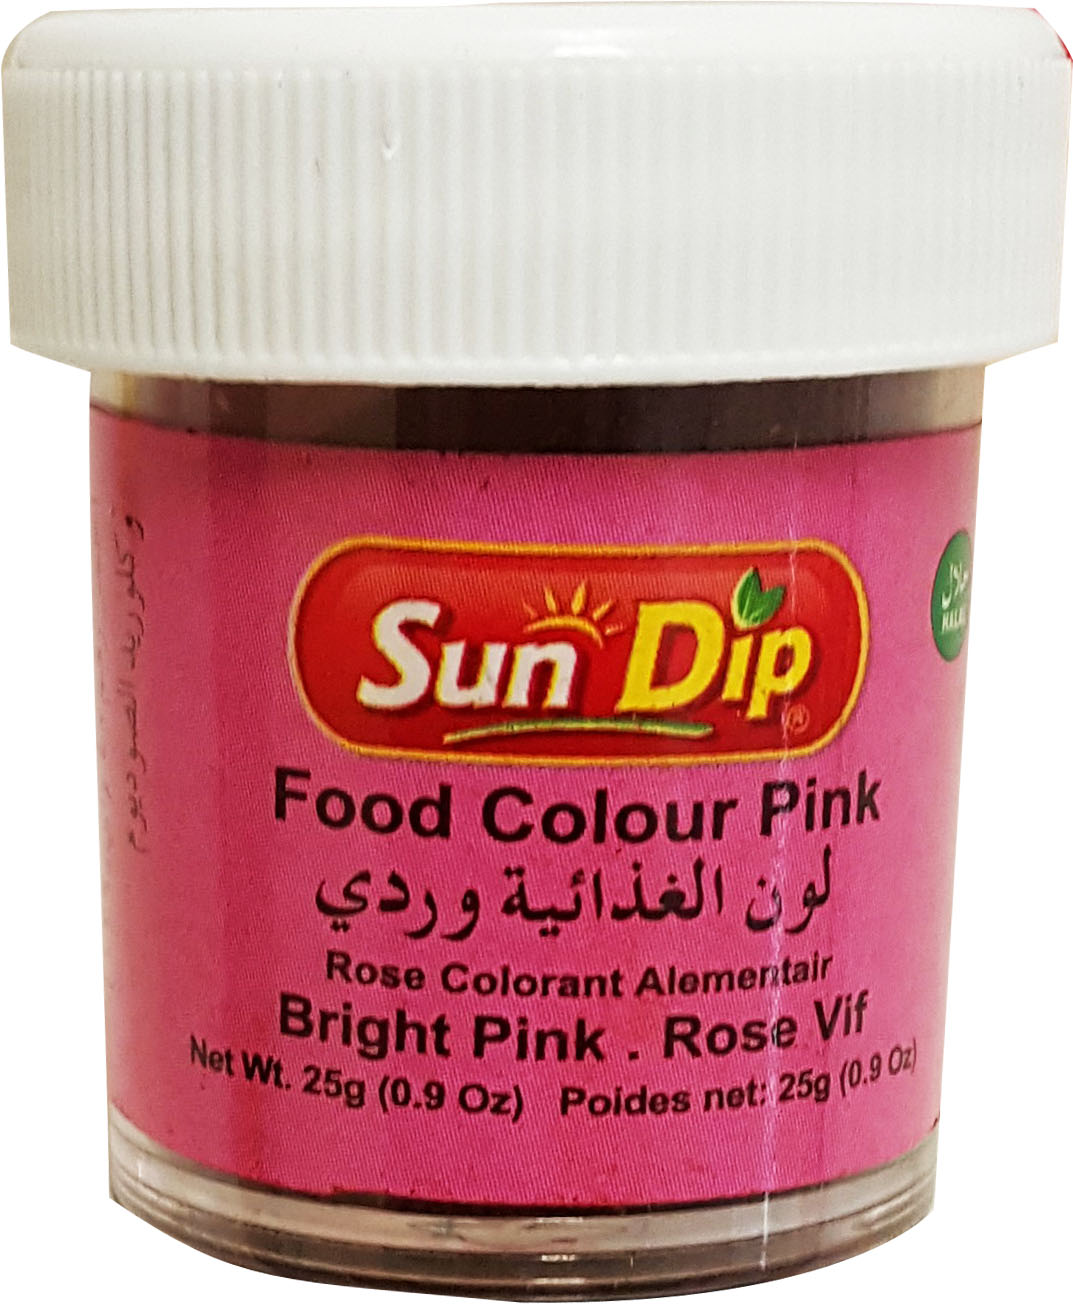 Sundip Food Colour Pink